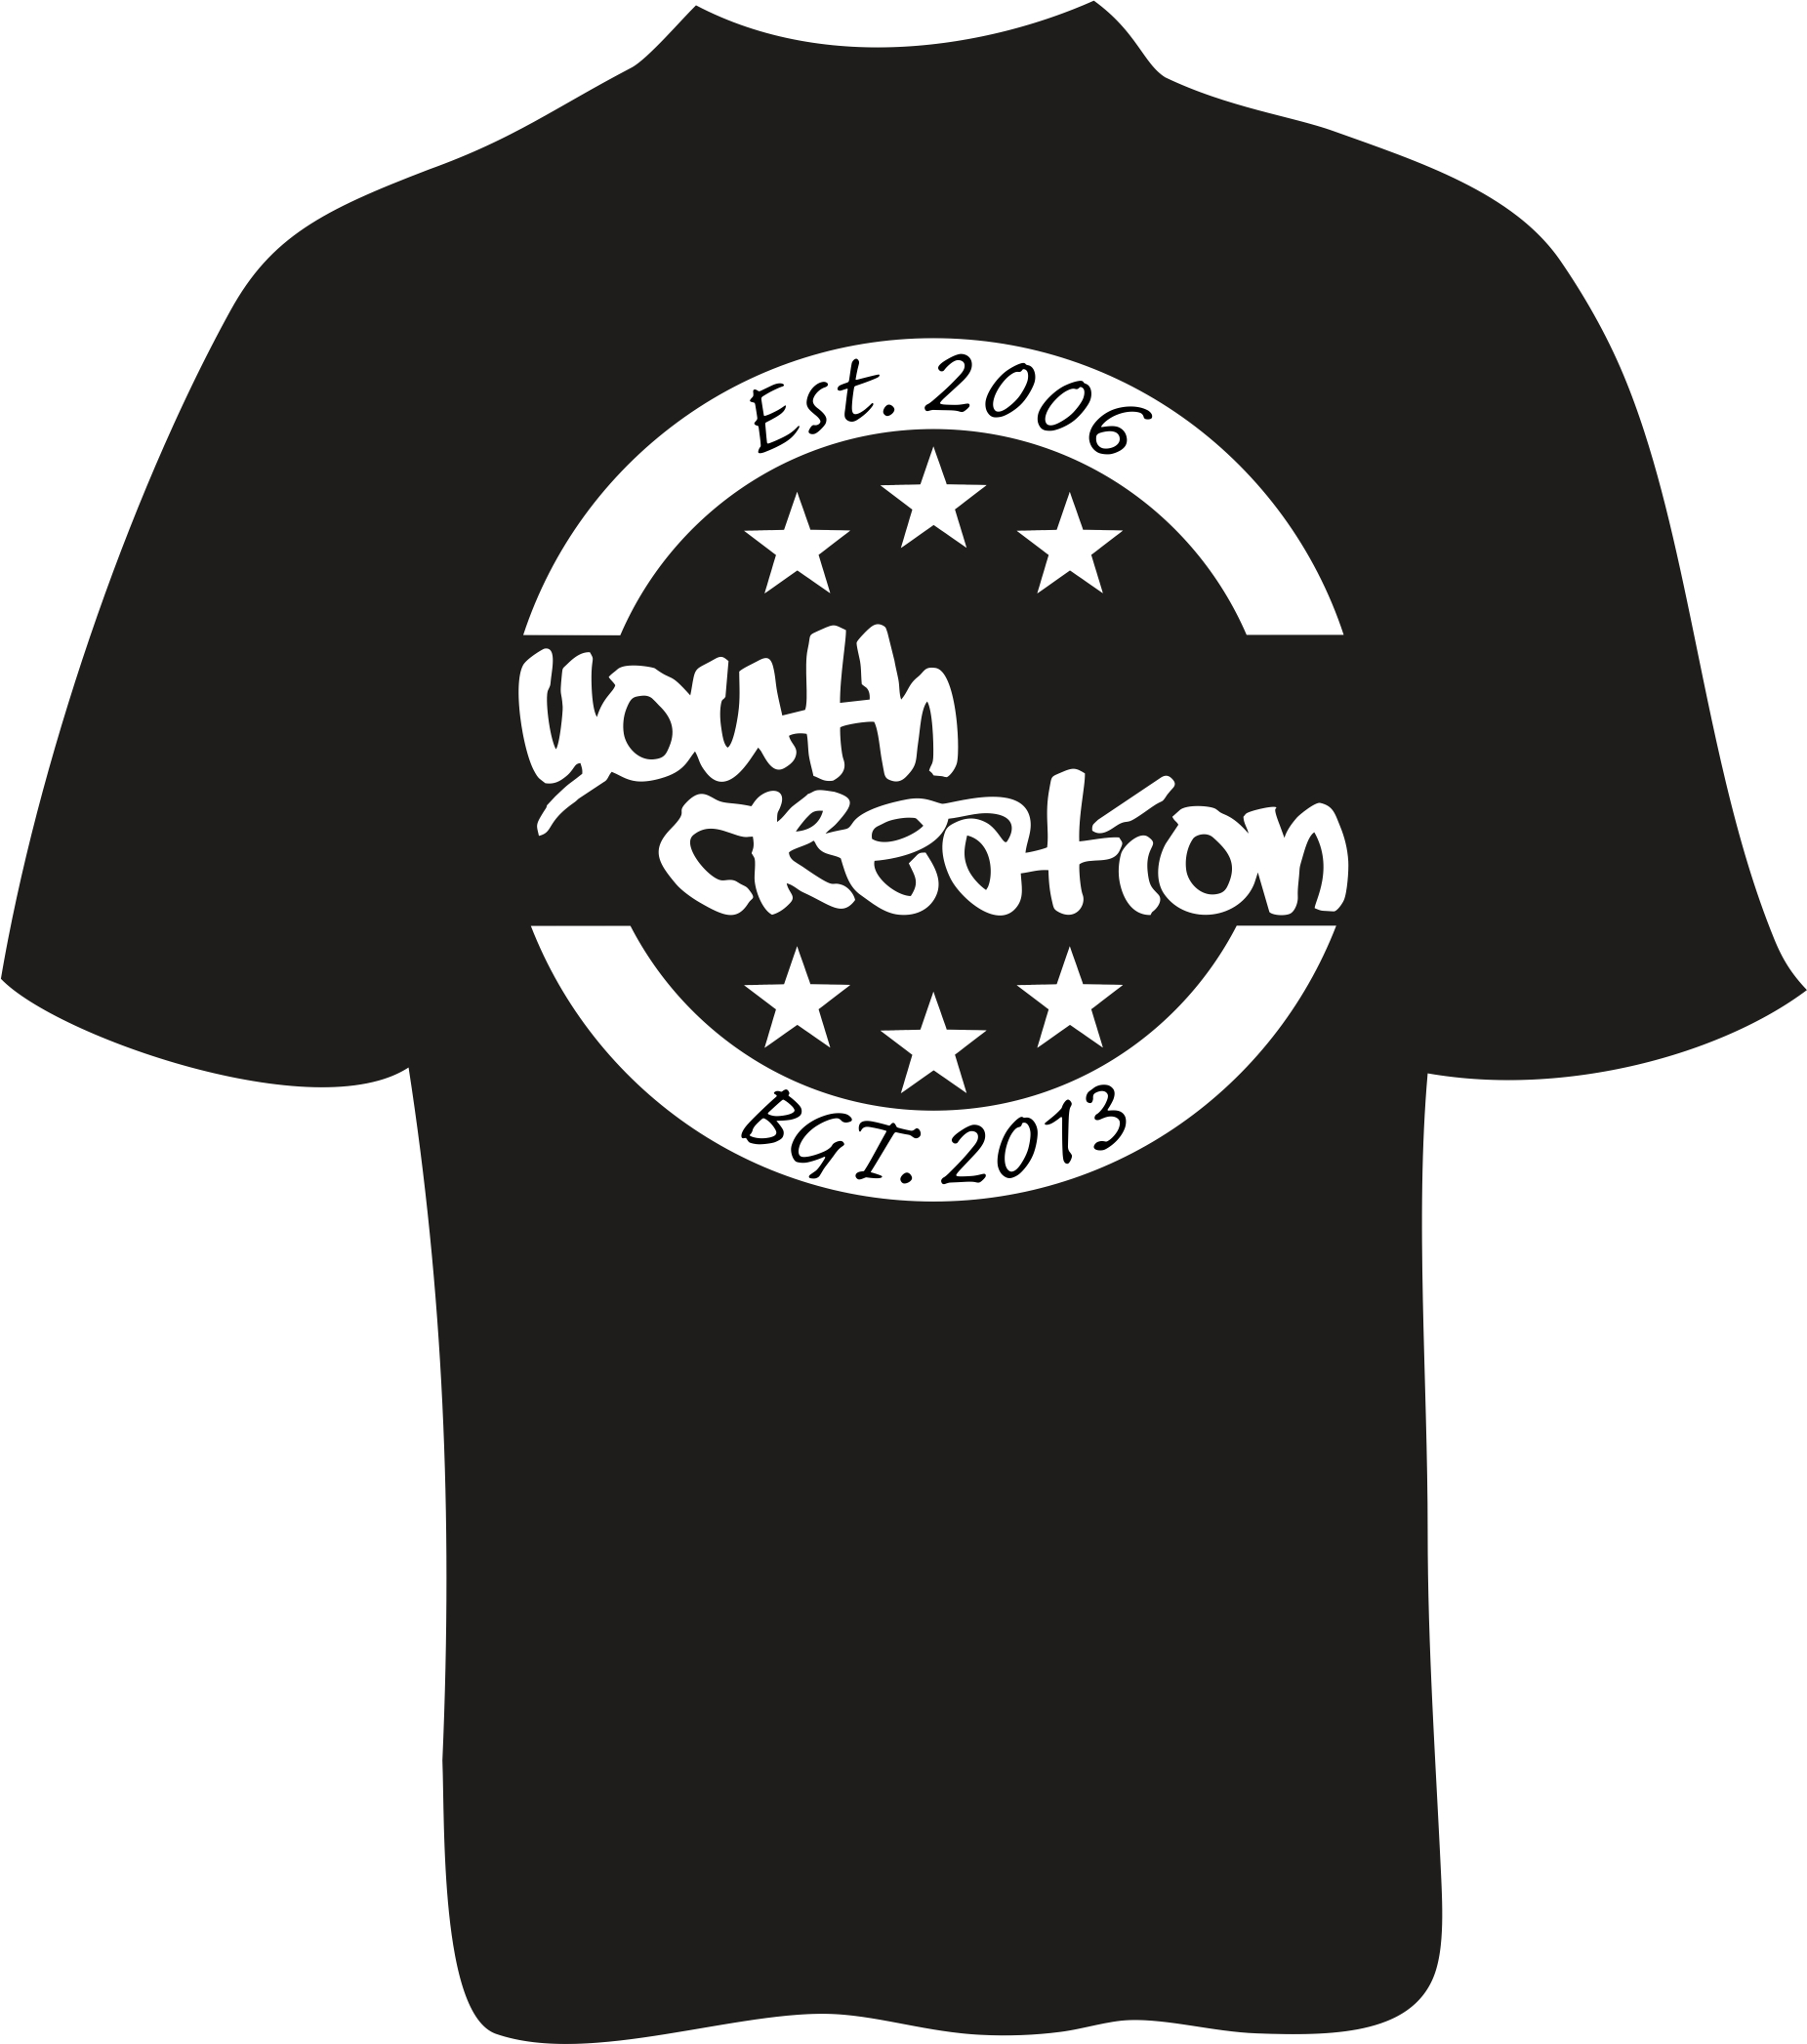 Youth Creation Children's Tee Shirt